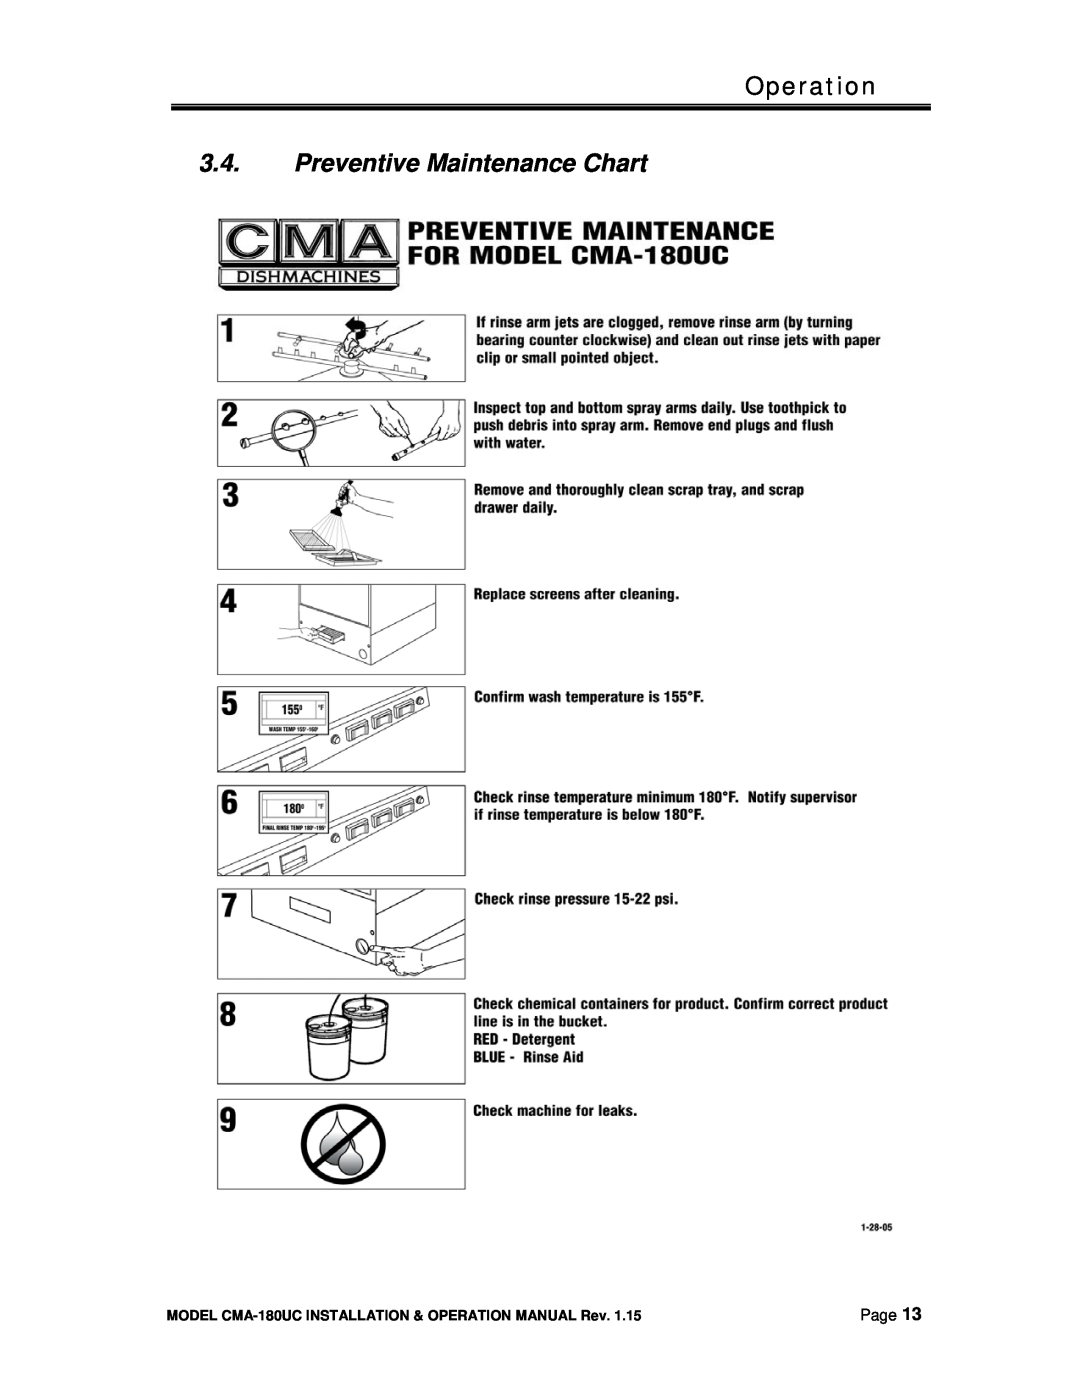 CMA Dishmachines CMA-180UC manual Preventive Maintenance Chart, Operation, Page 